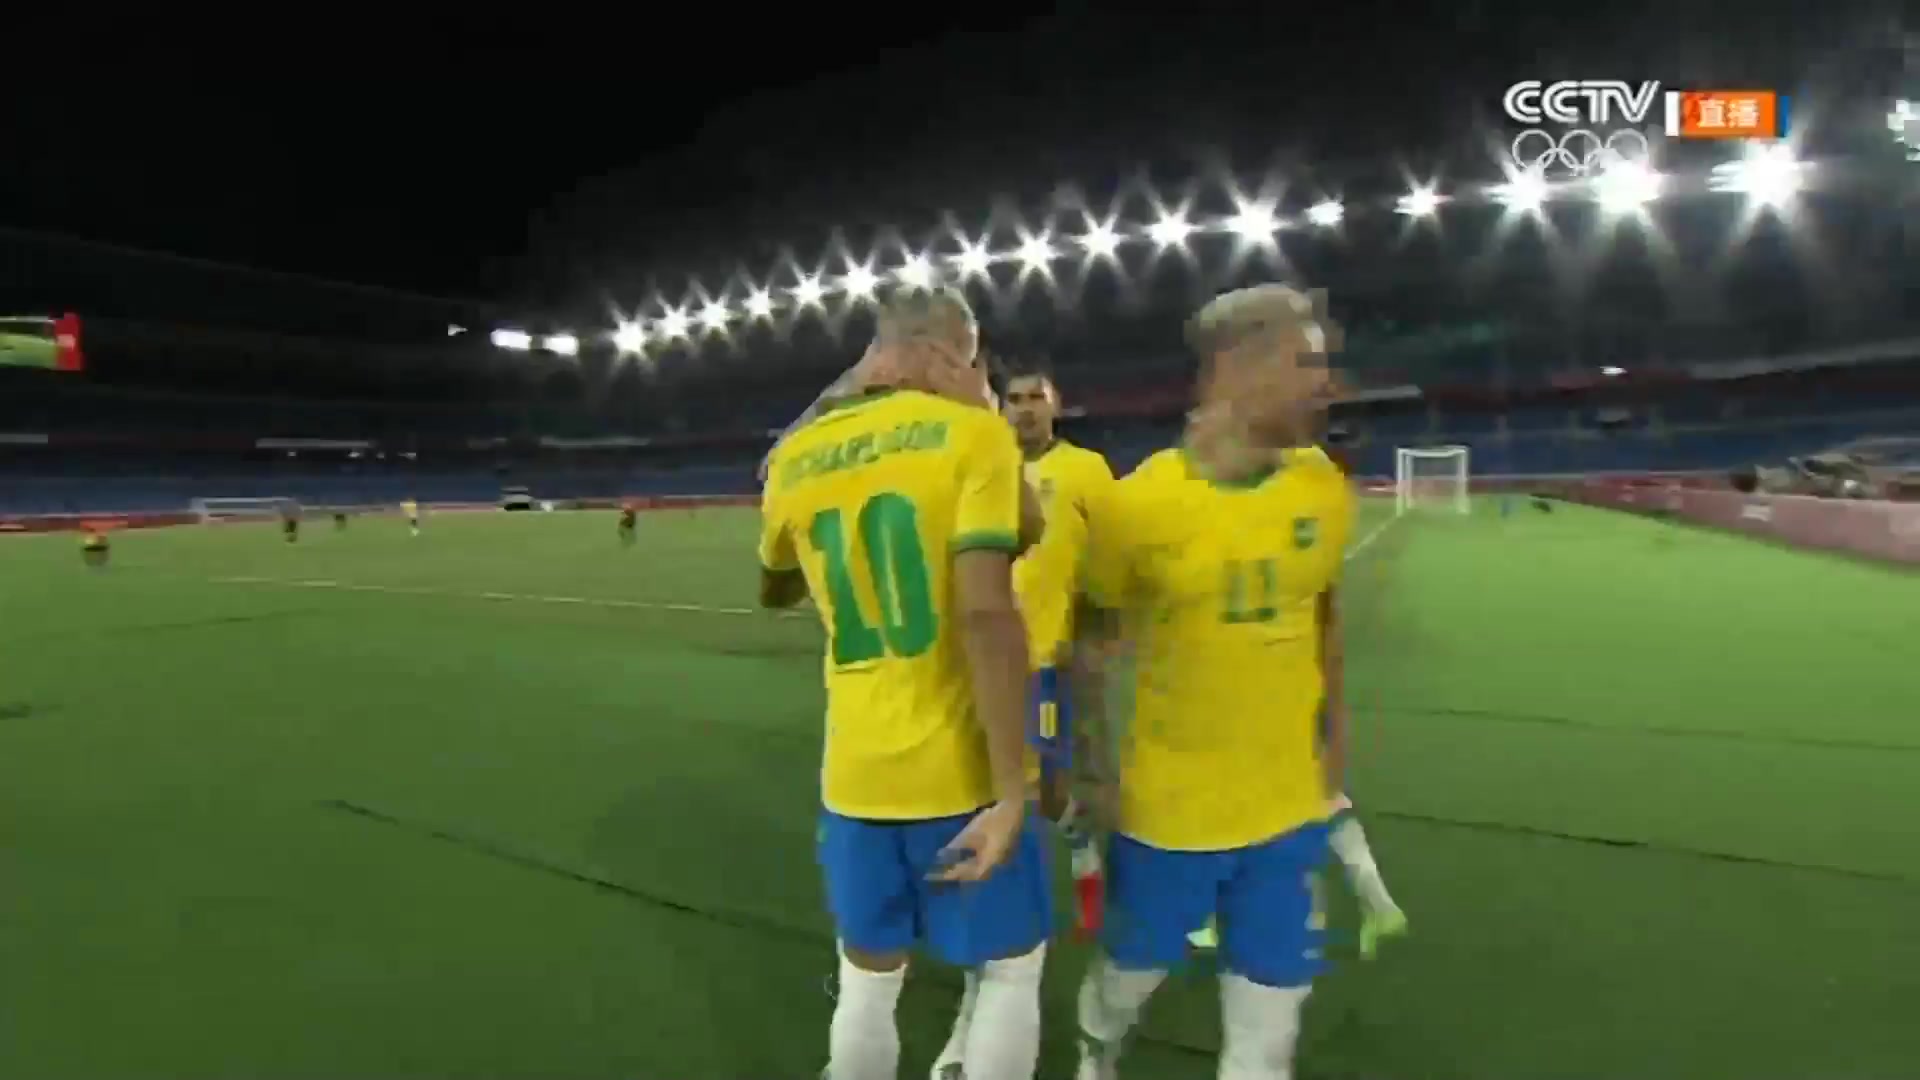 MOFT Brazil U23 Vs Germany U23 Richarlison de Andrade Goal in 6 min, Score 1:0